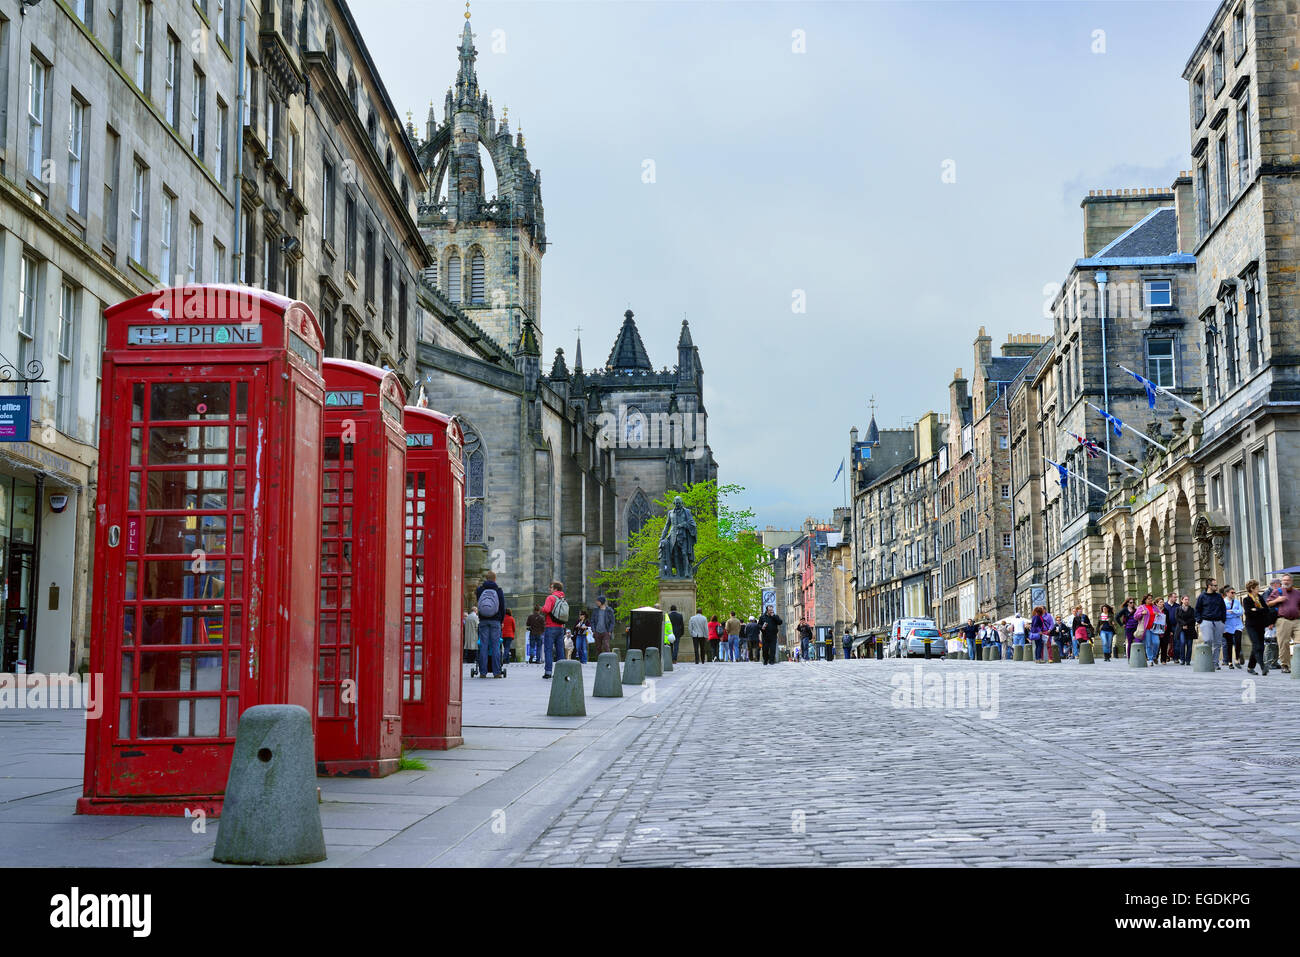 British telephone boxes in High Street, UNESCO World Heritage Site Edinburgh, Edinburgh, Scotland, Great Britain, United Kingdom Stock Photo